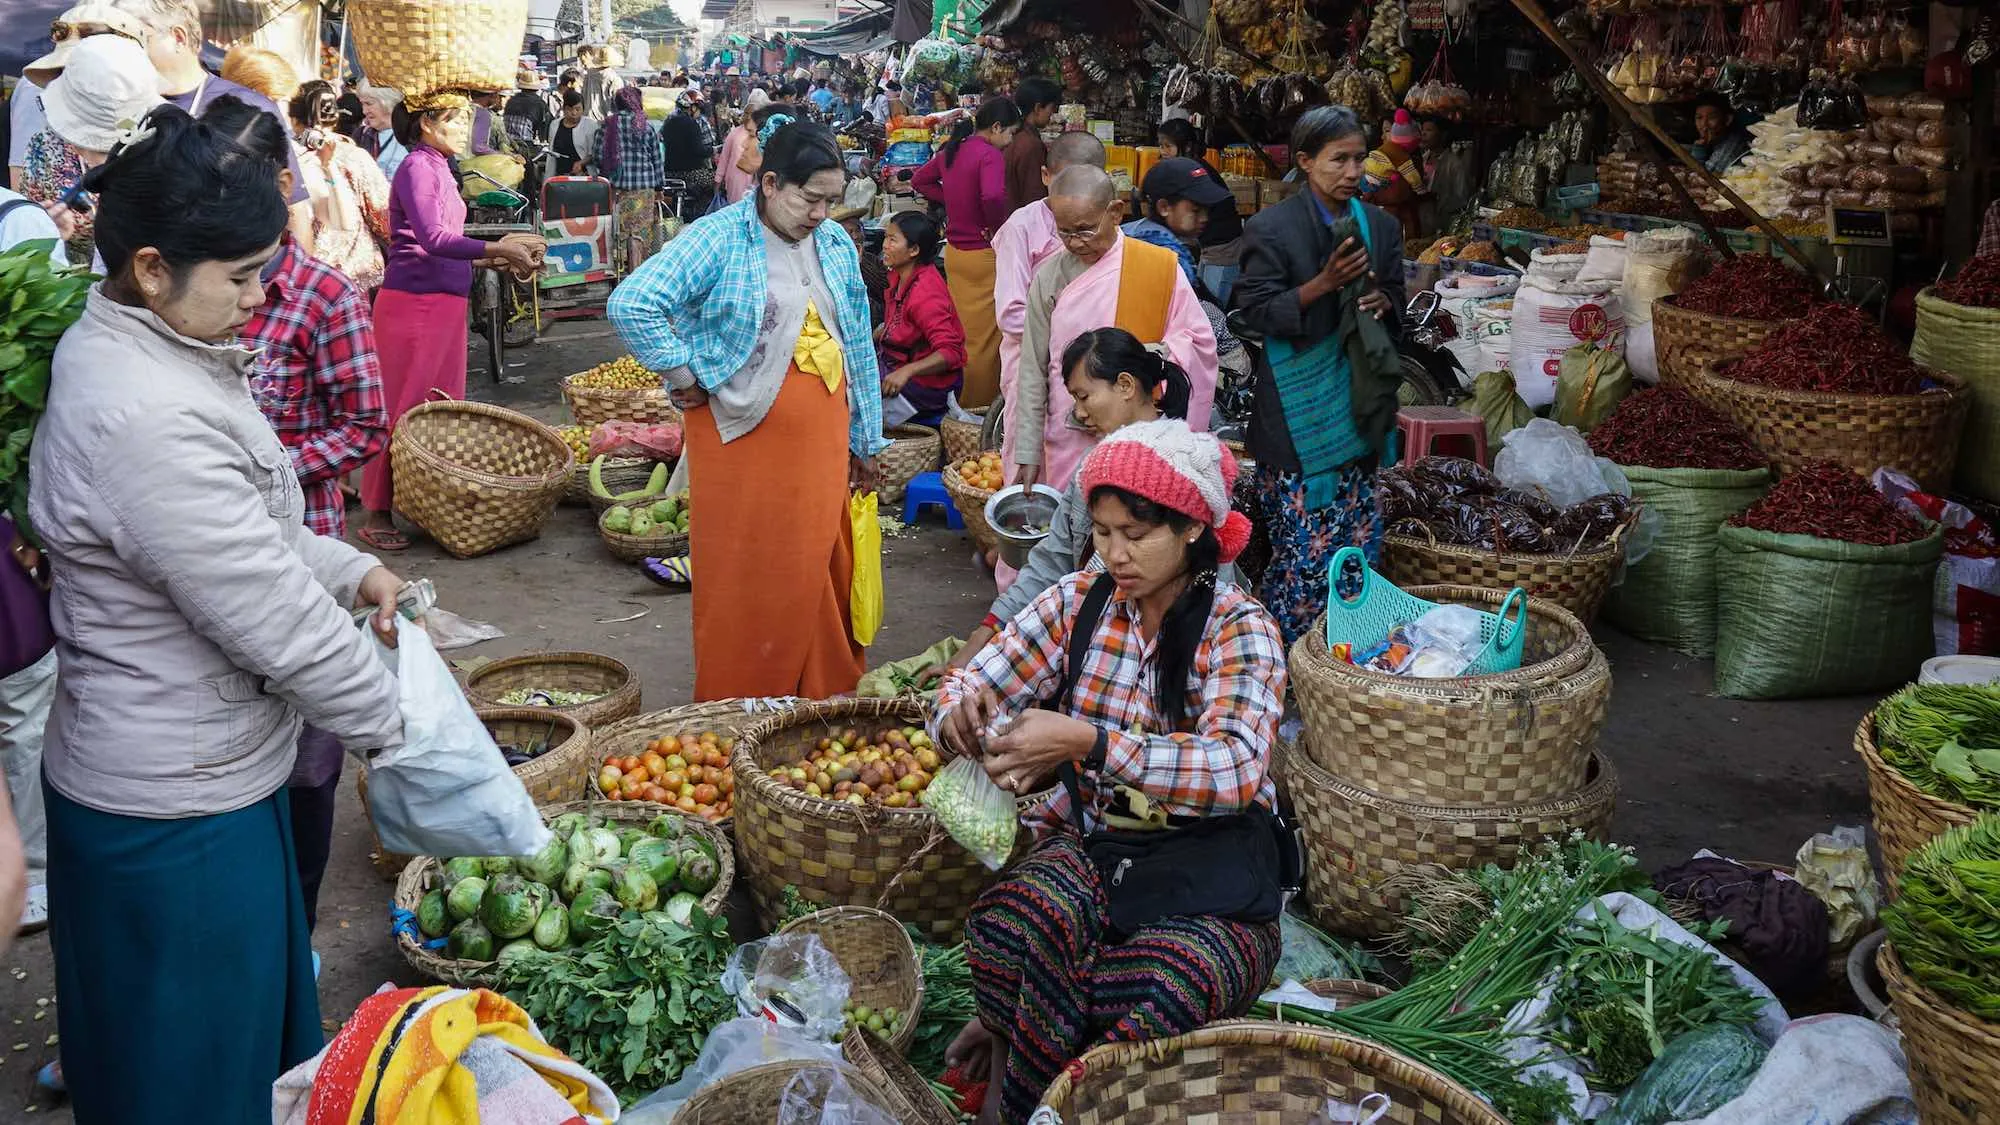 Zegyo Market in Myanmar, central_asia | Organic Food,Groceries,Clothes,Handicrafts,Fruit & Vegetable,Herbs,Meat - Country Helper